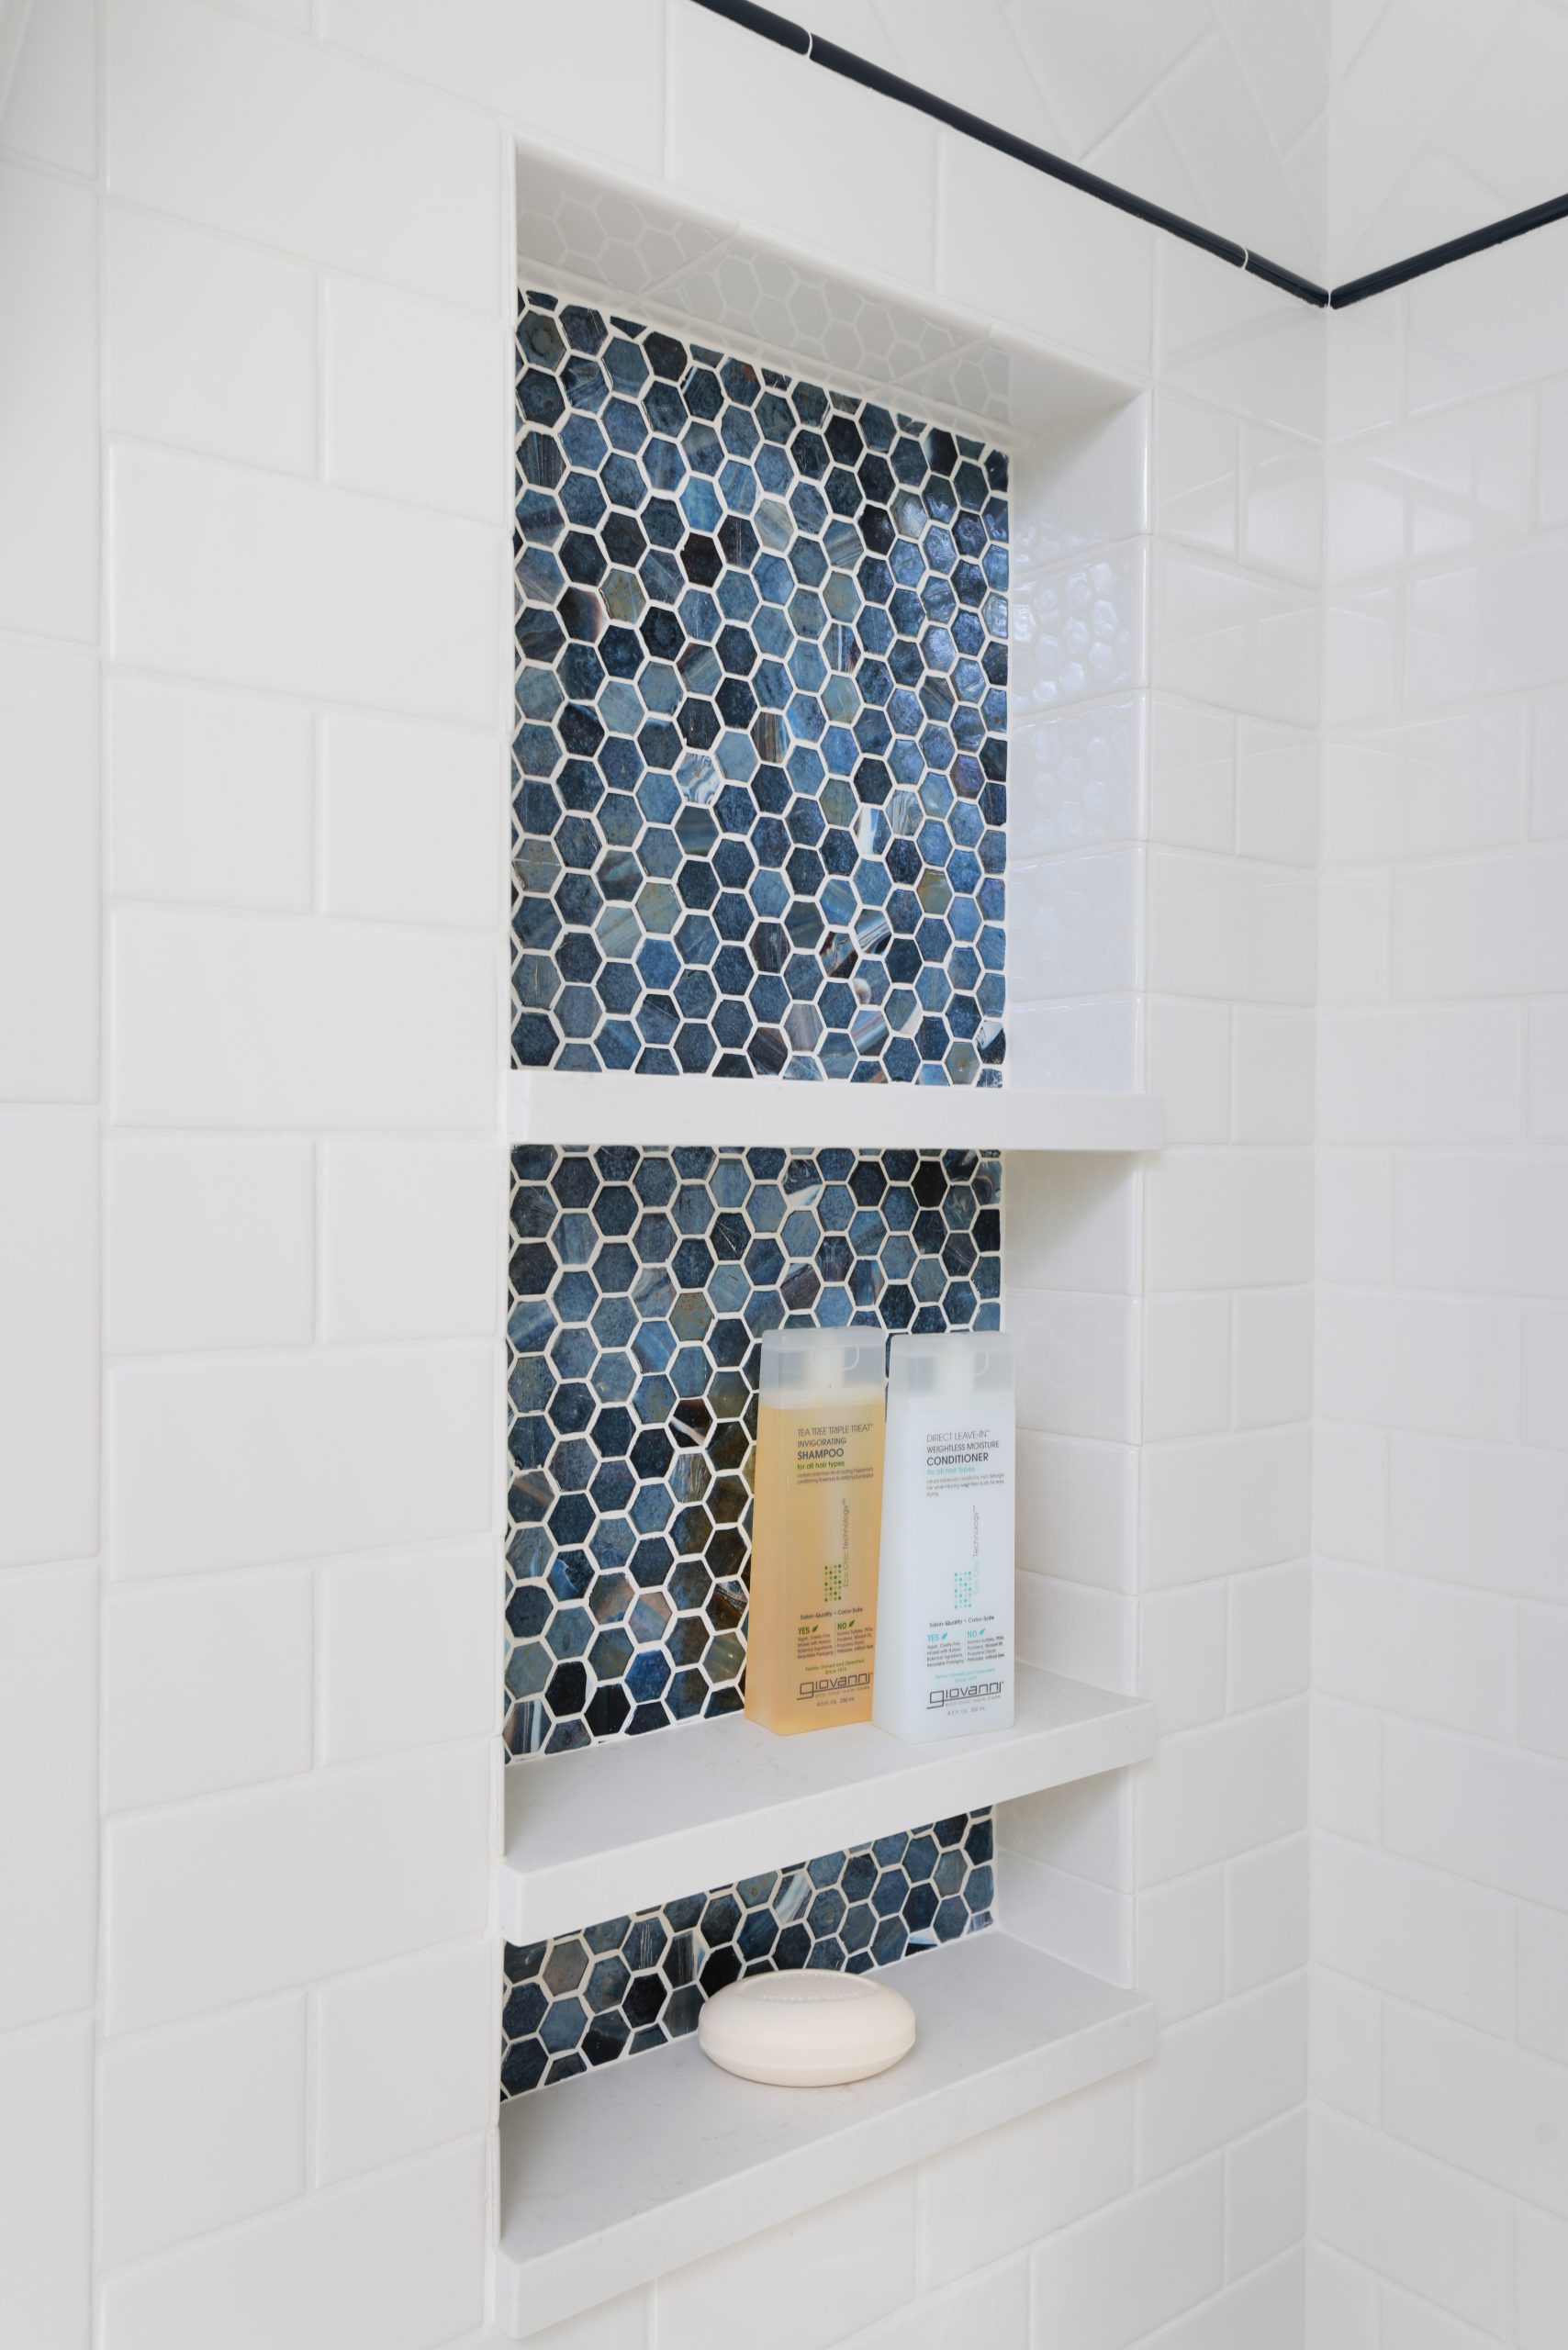 Decorative shower niche with blue hex tile